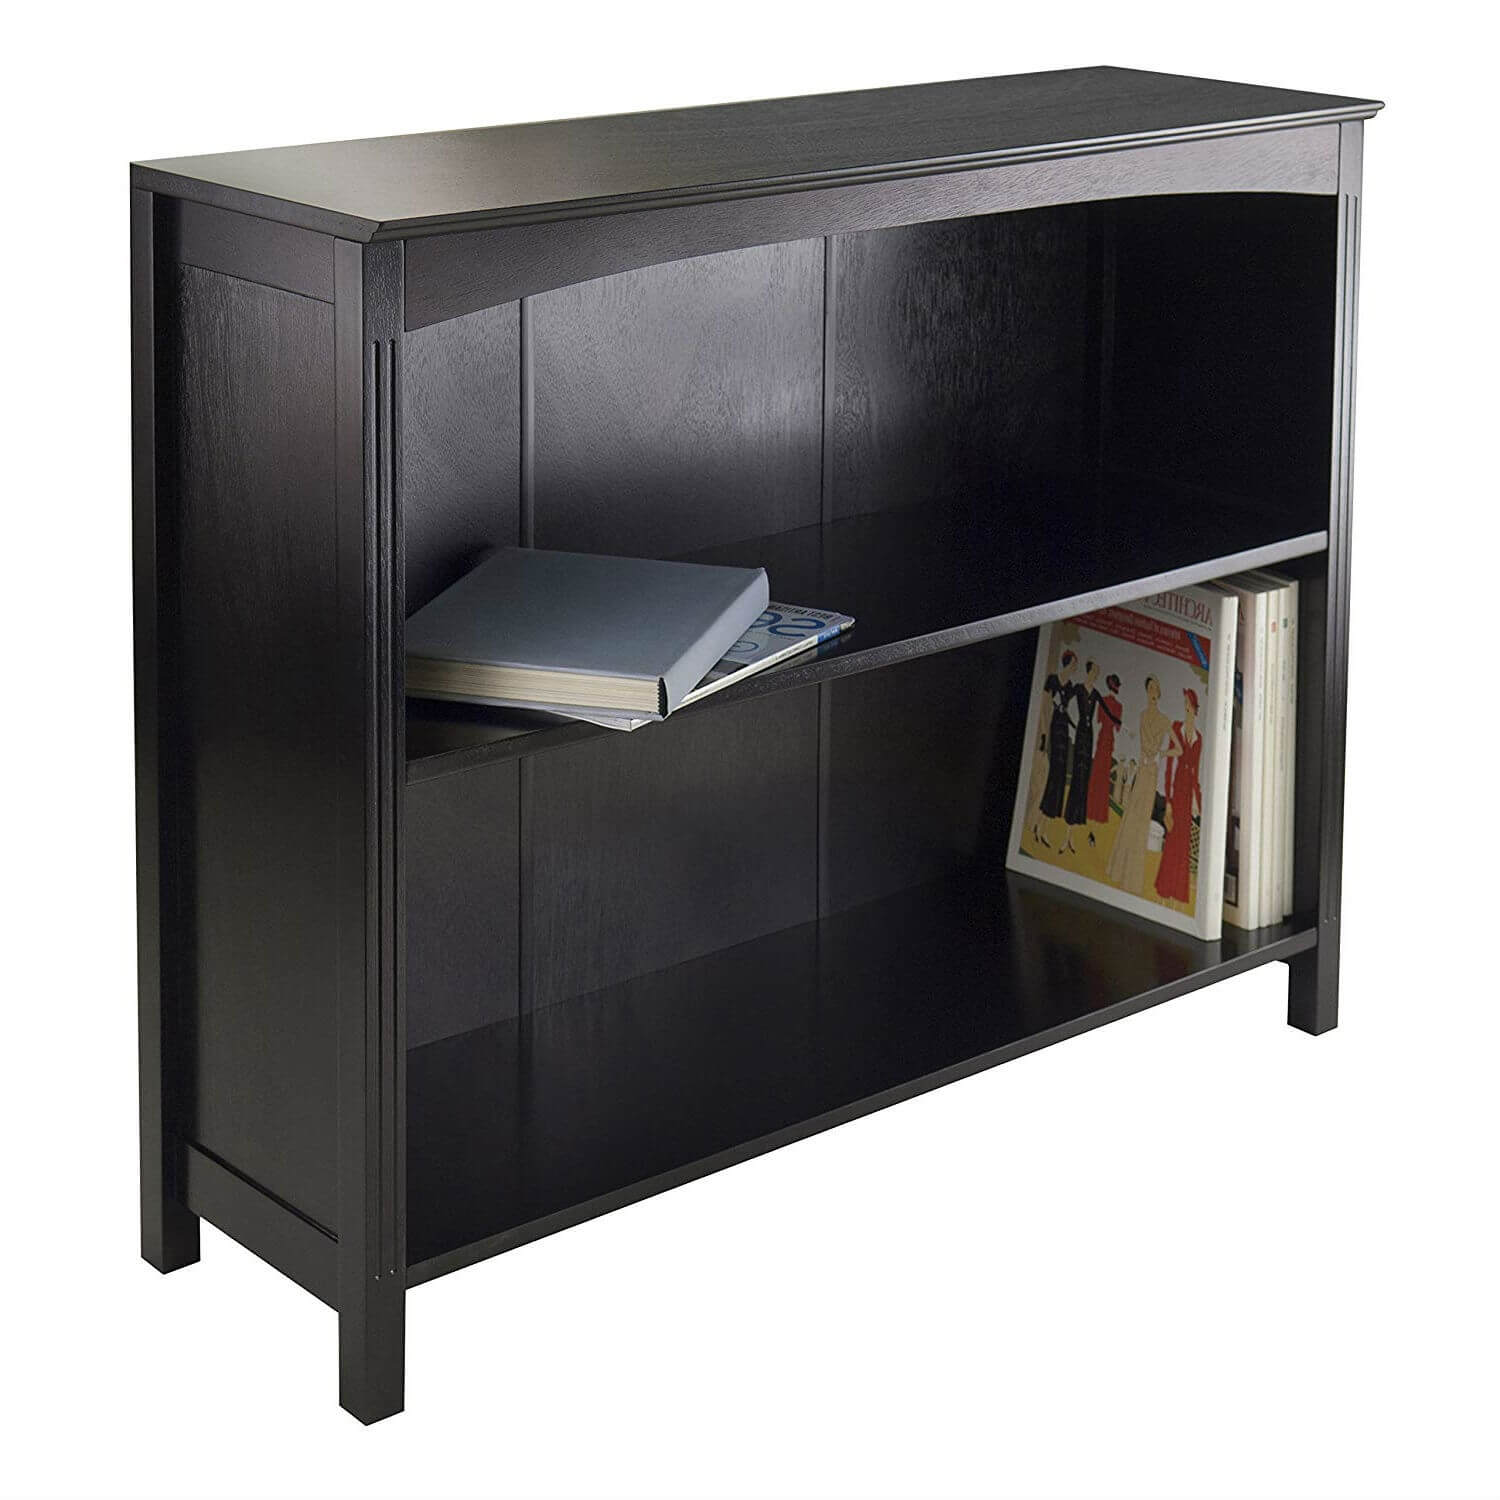 Espresso 3 Tier Bookcase Shelf Dresser with 3 Storage Baskets